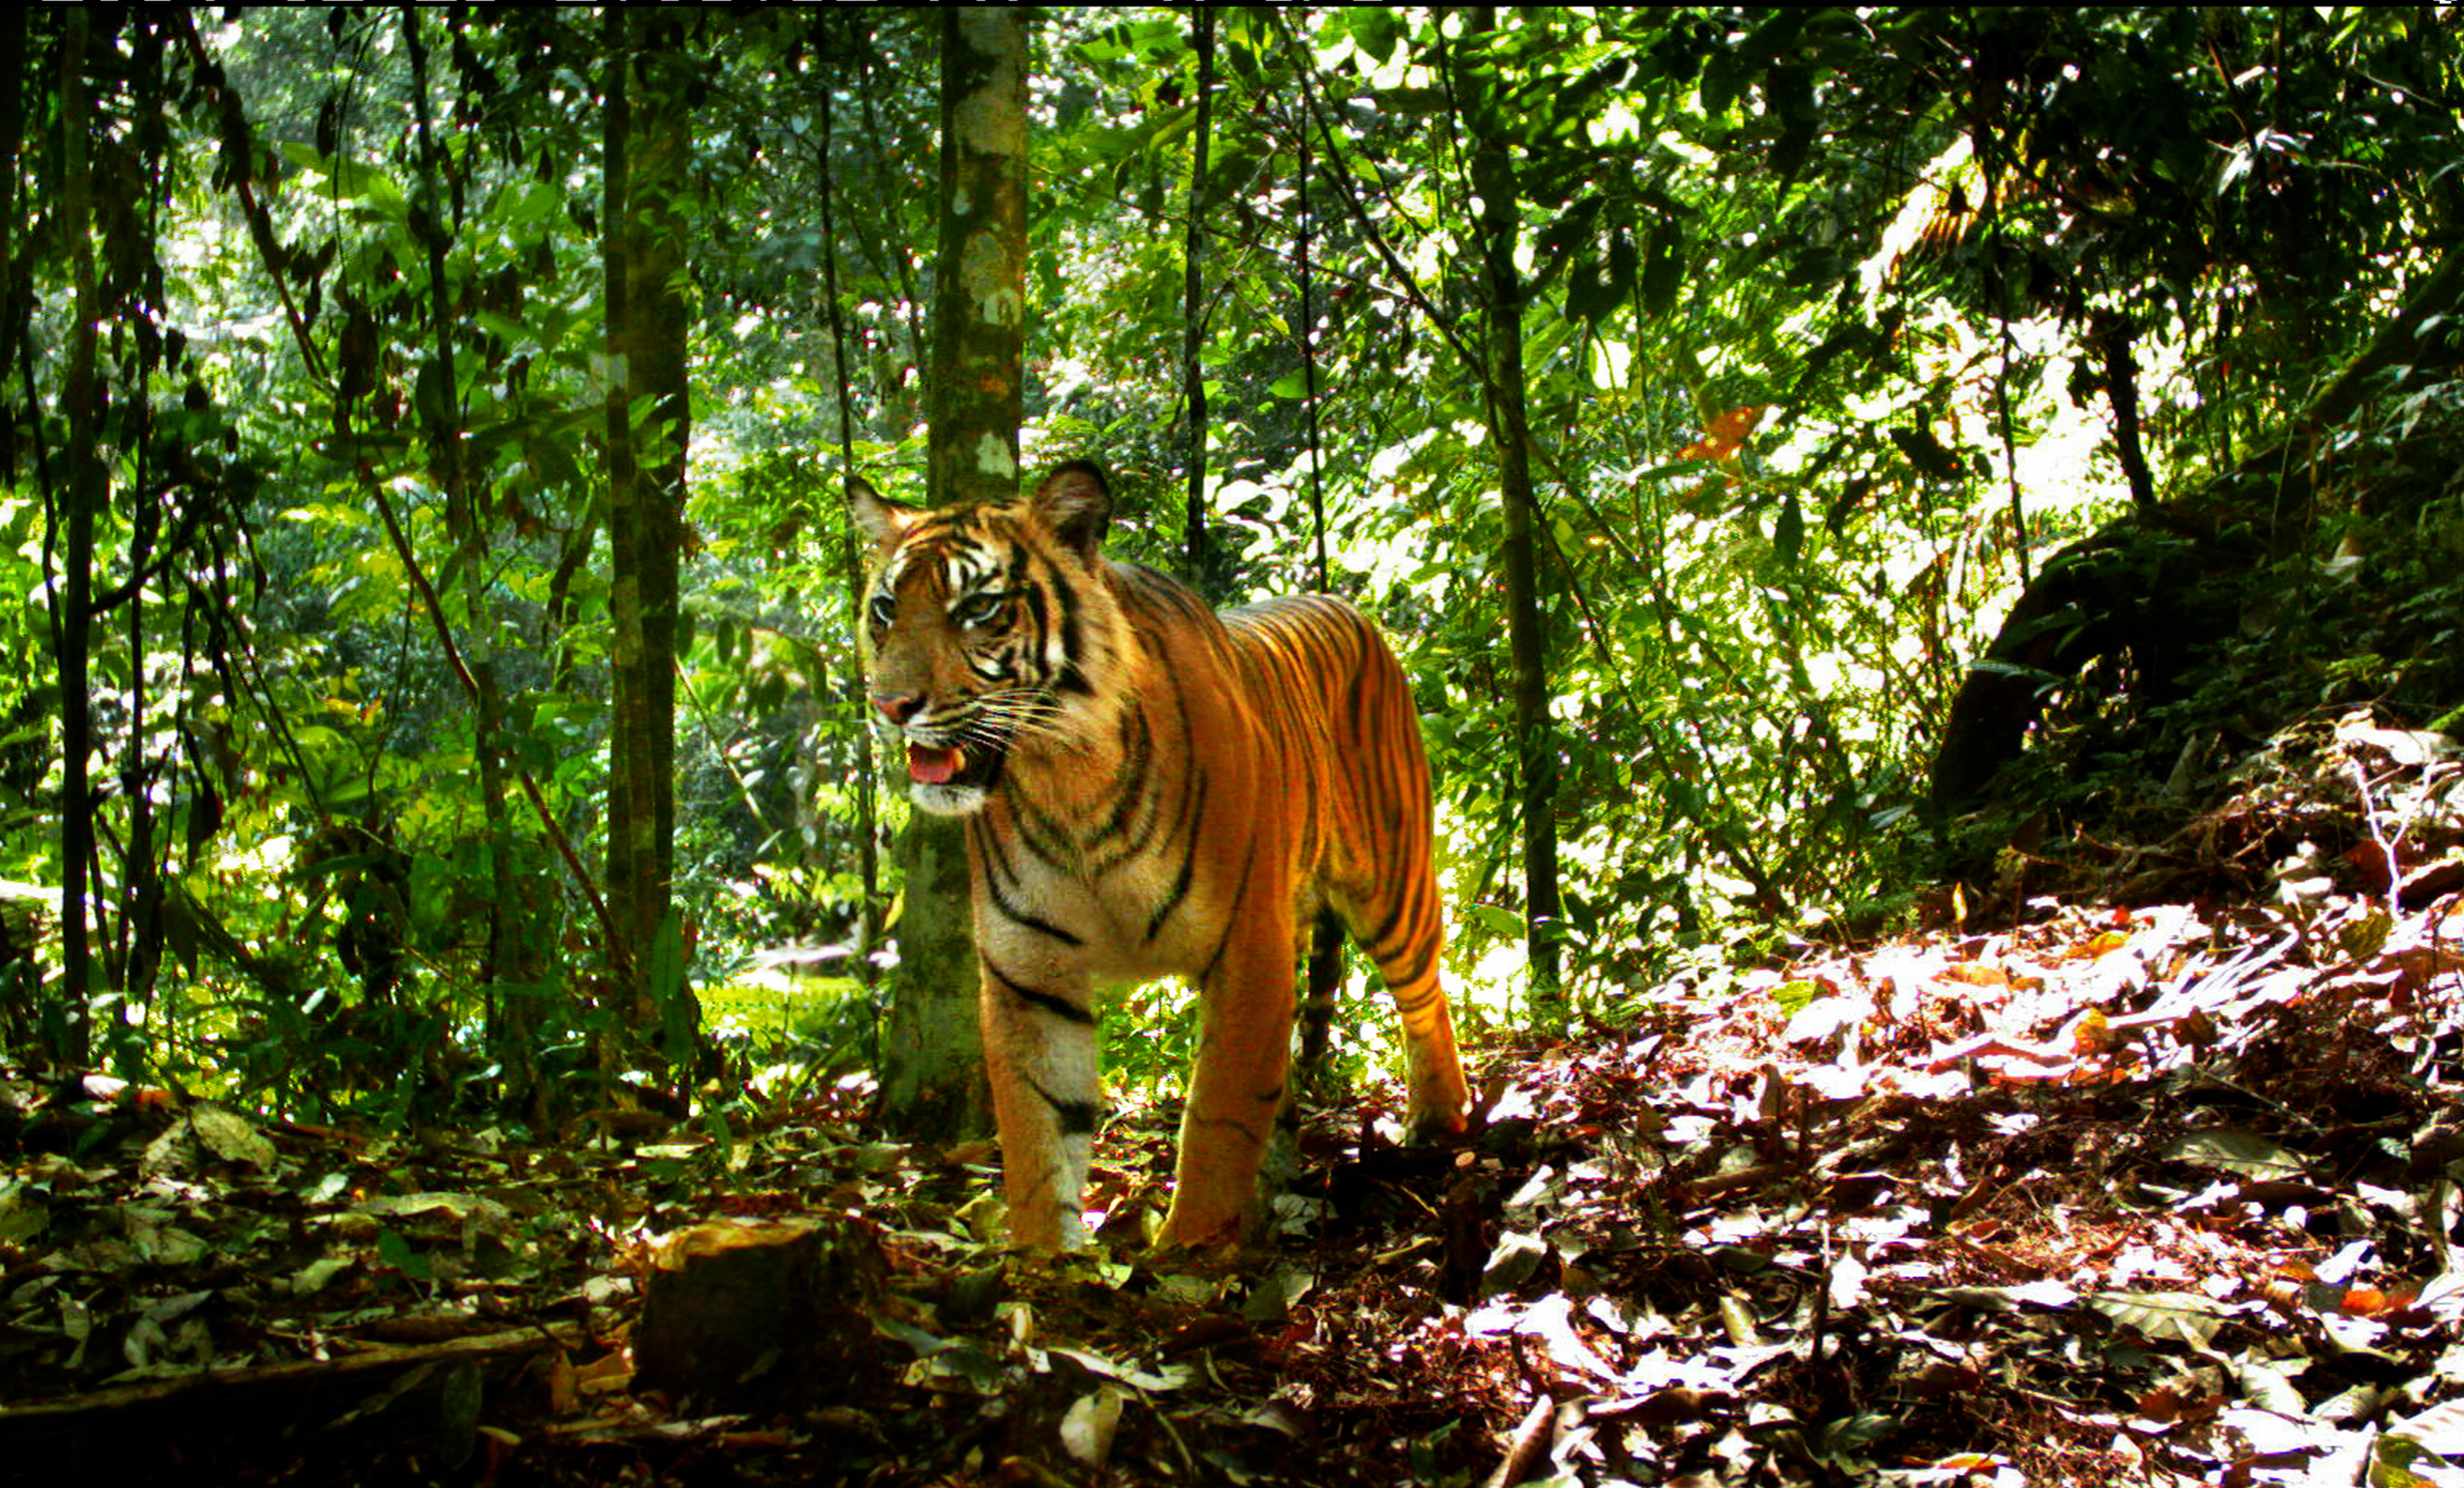 Jungle tiger. Суматранский тигр. Тигр тропического леса Индии. Тайгер тигр в джунглях. Тигр в тропиках.